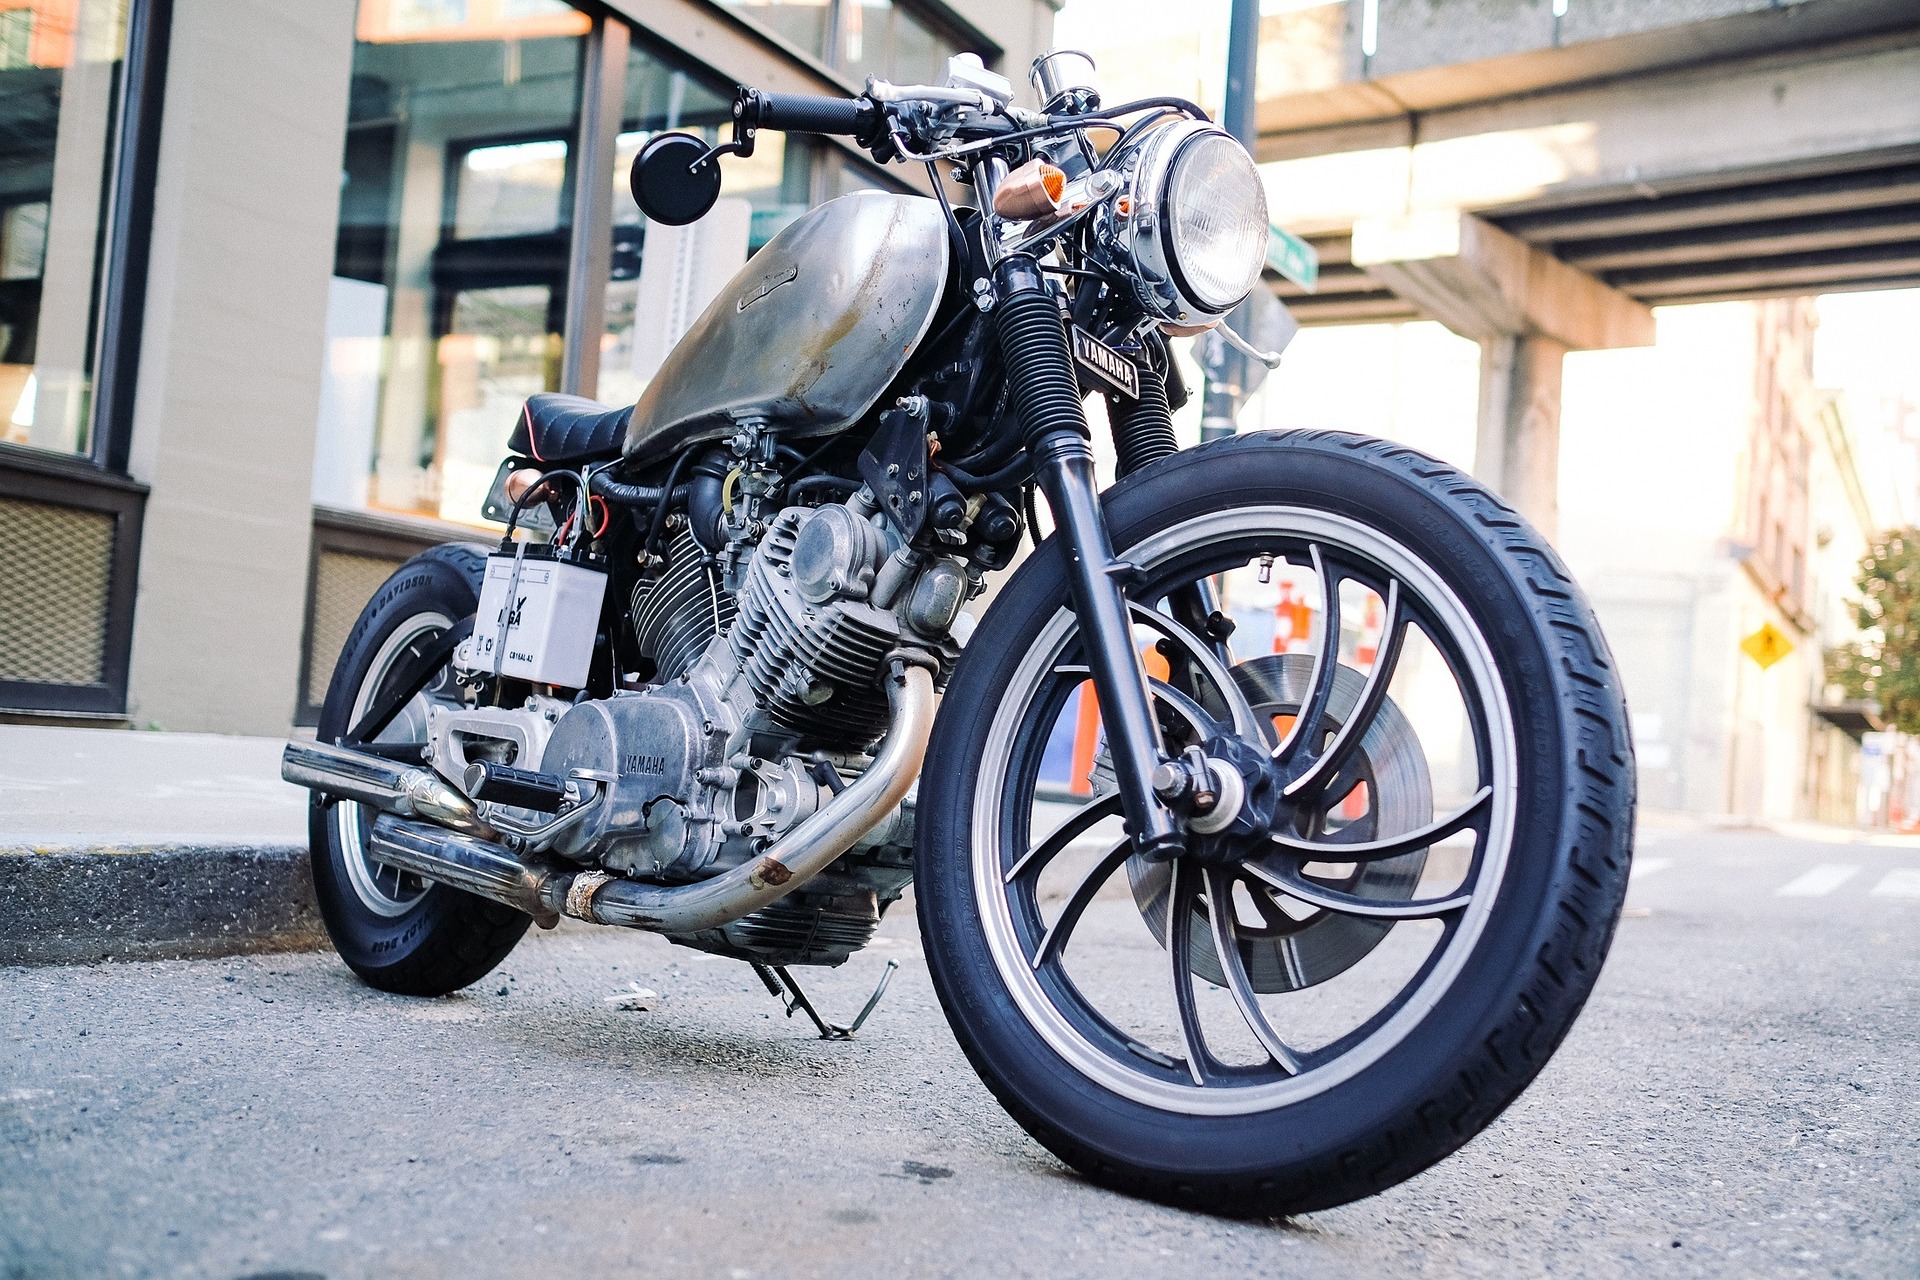 5 Reasons You Need Motorcycle Insurance